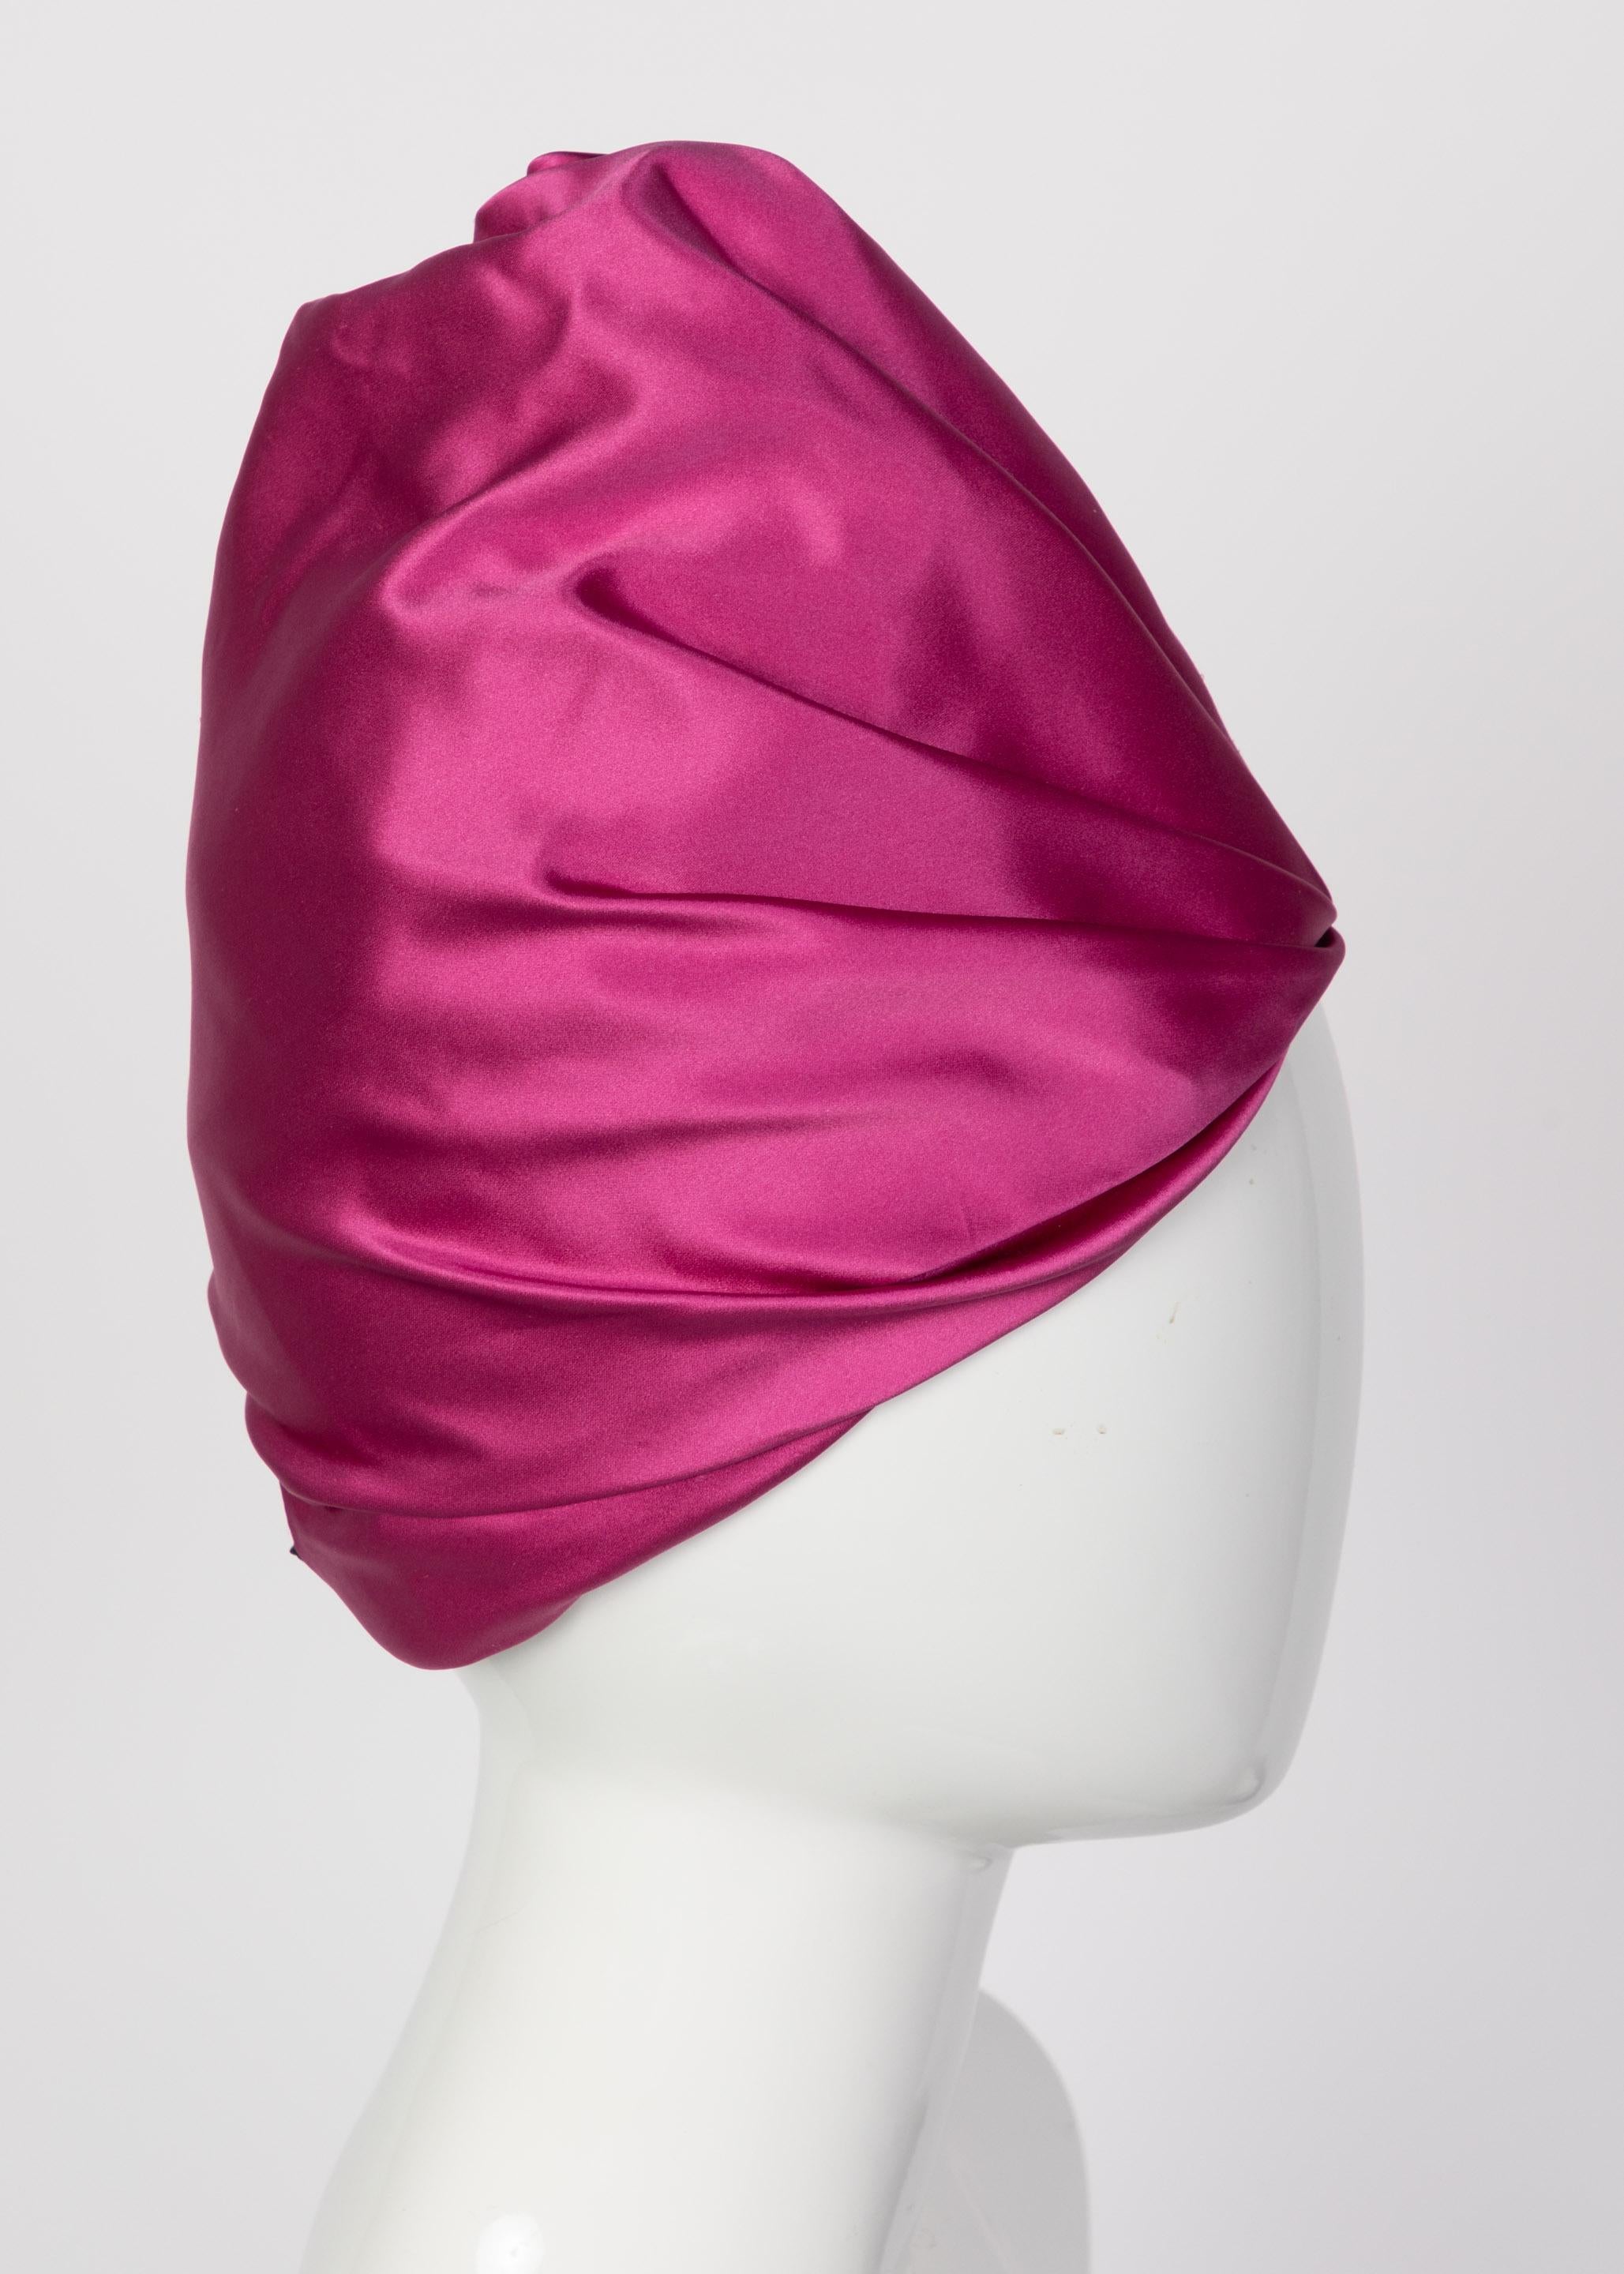 Women's Prada Pink Silk Satin Turban Hat Runway, 2007 For Sale